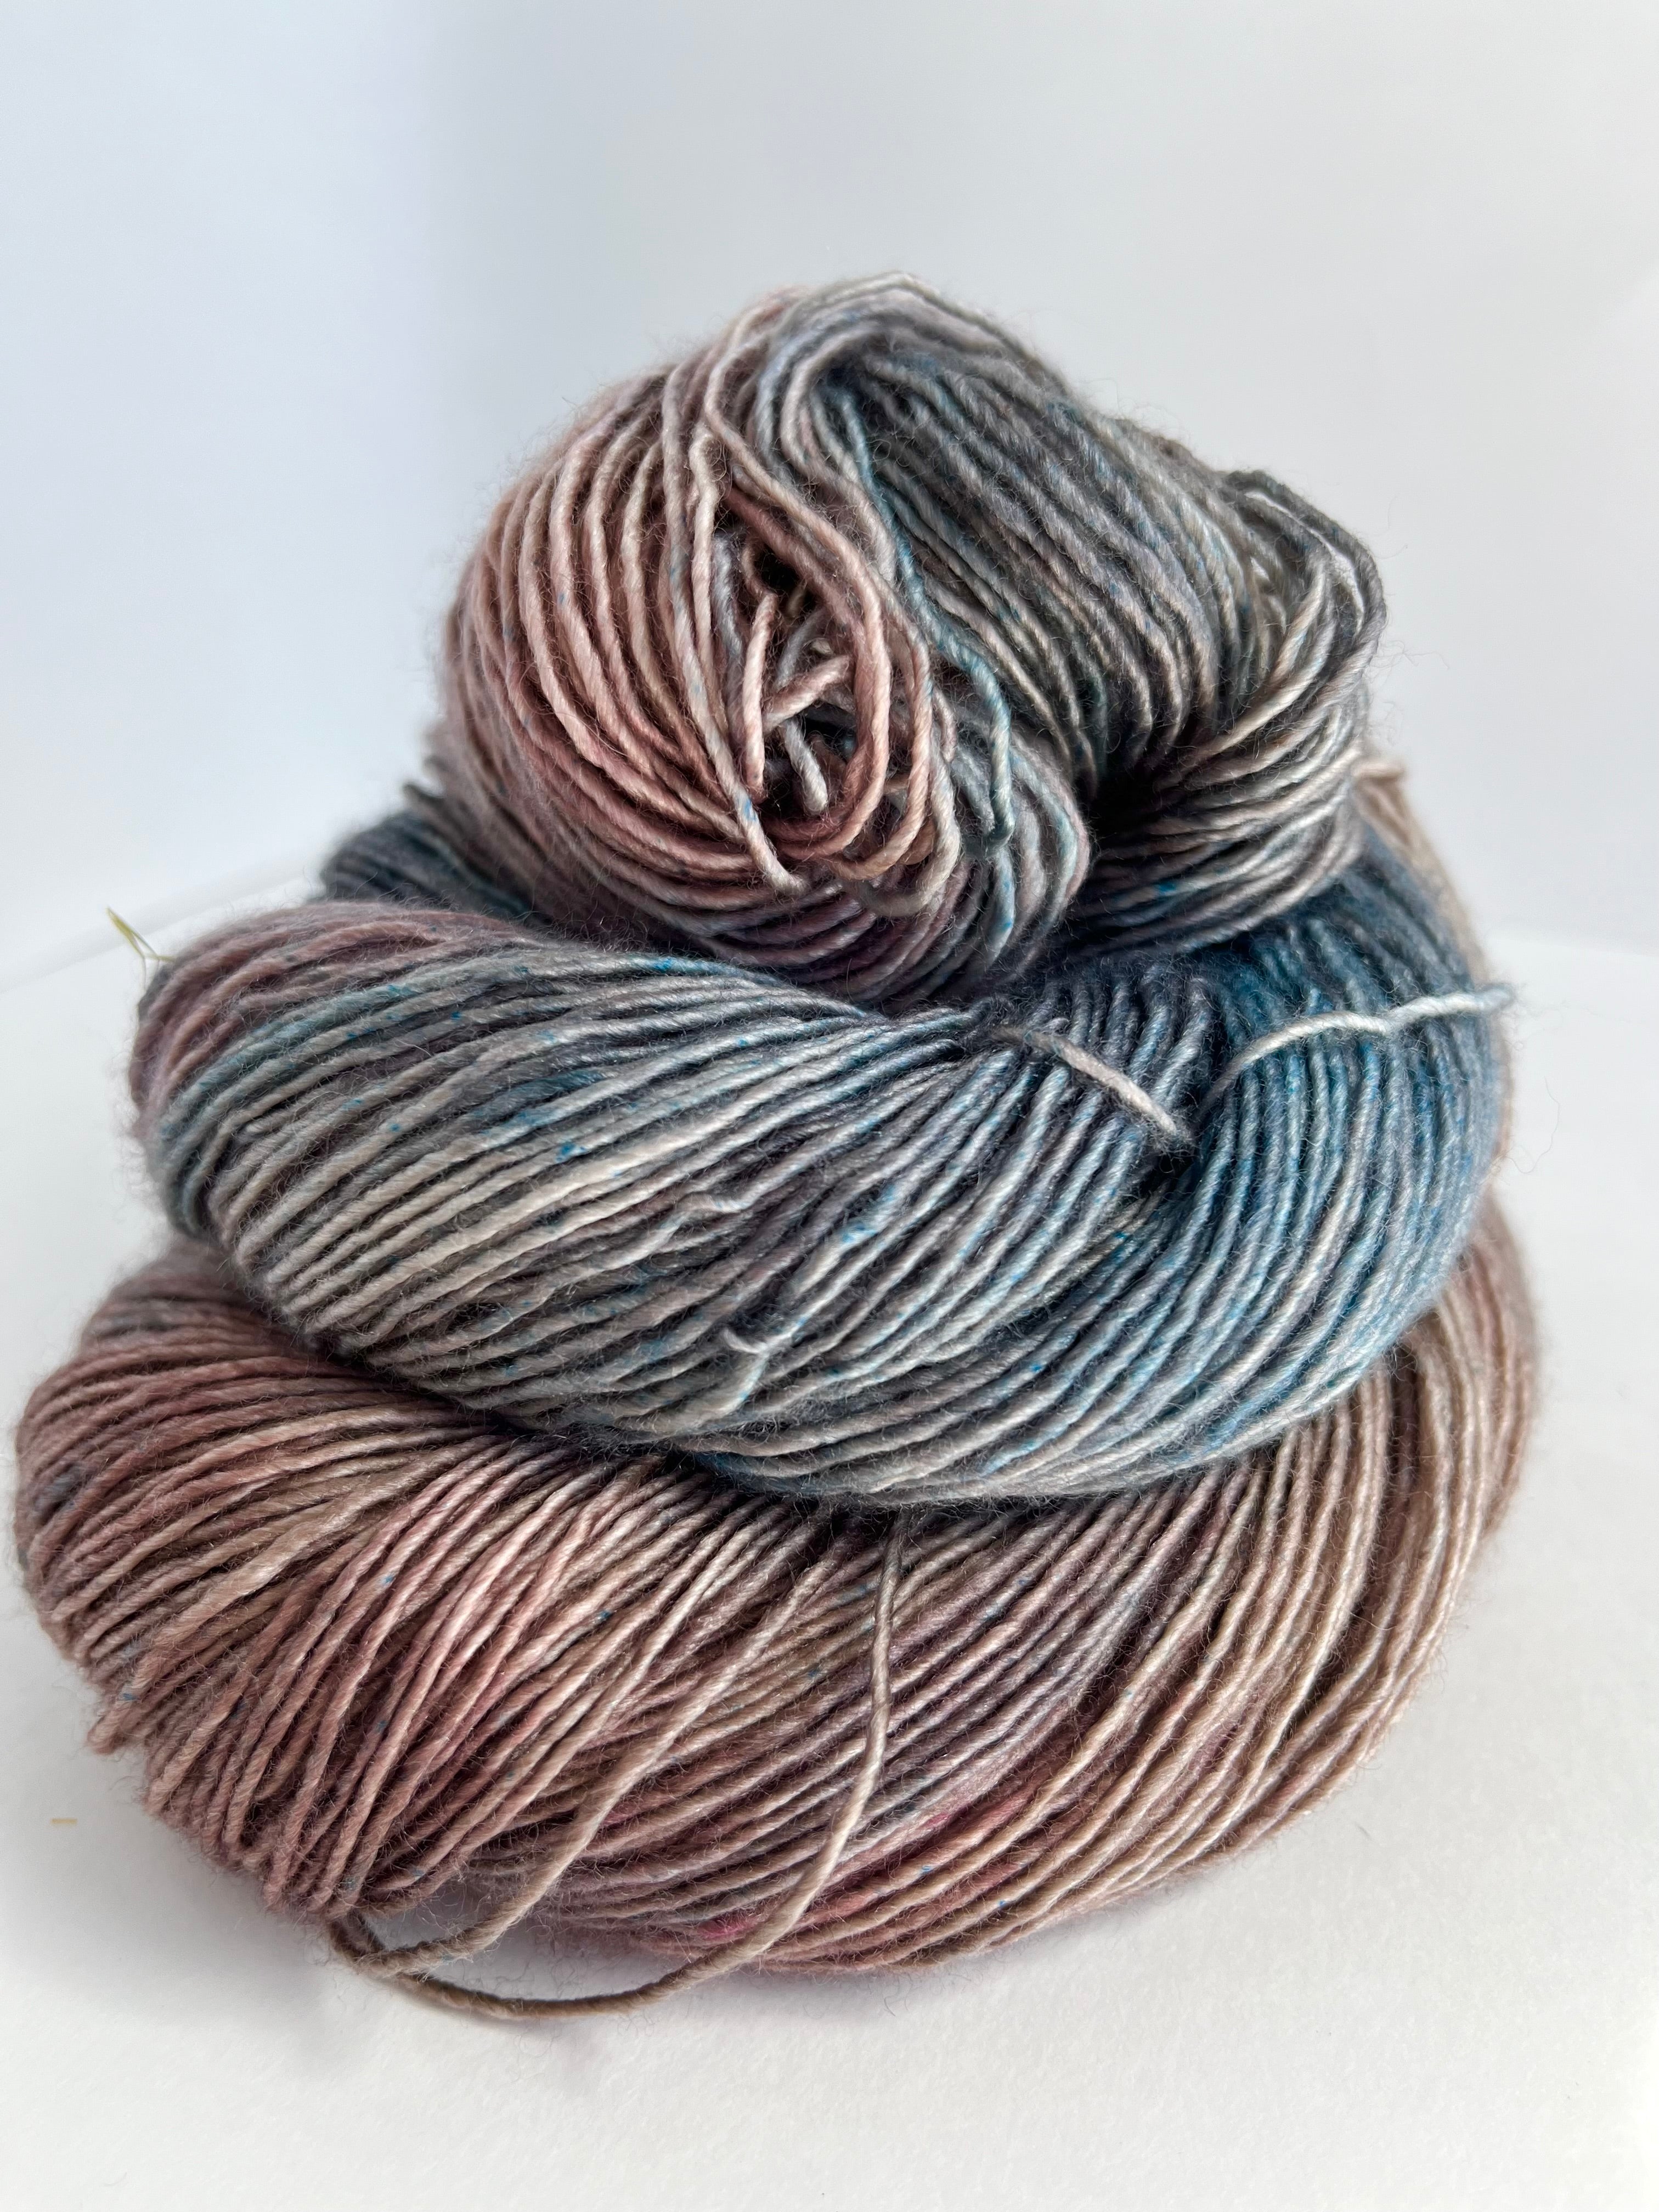 Eureka Sky - River Silk & Merino from Tributary Yarns